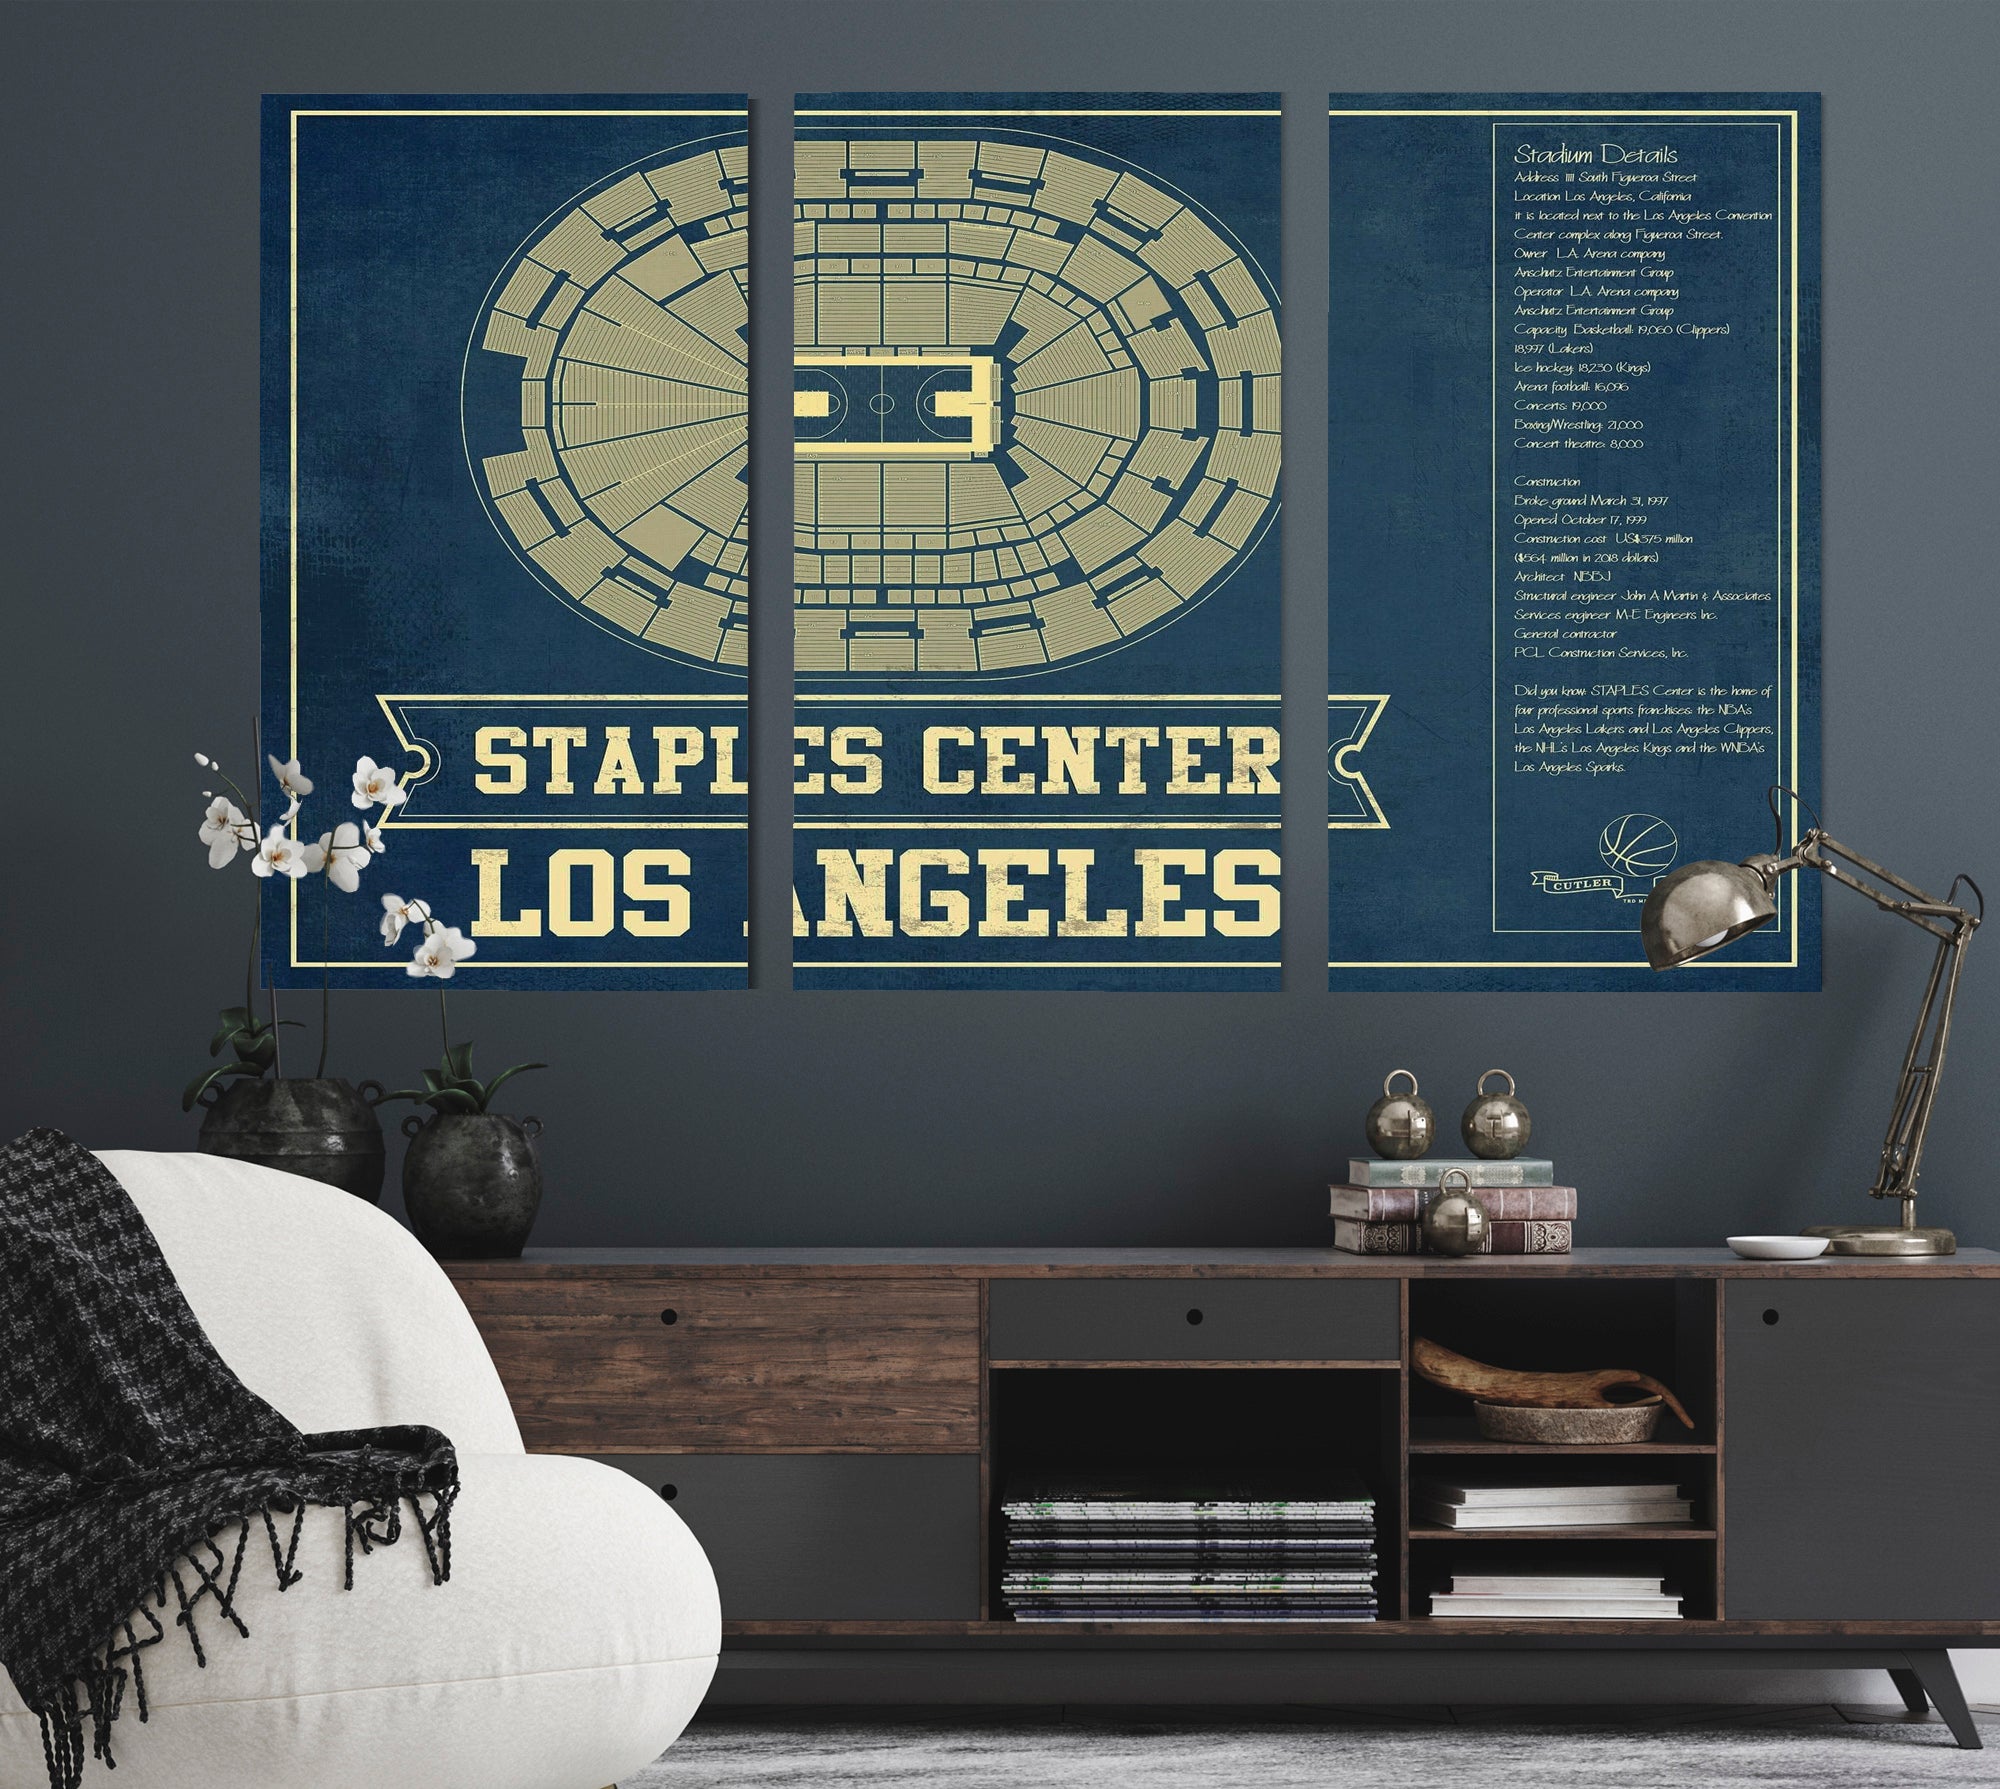 Los Angeles Kings - Staples Center (Crypto.com Arena) Vintage Hockey Blueprint NHL Print